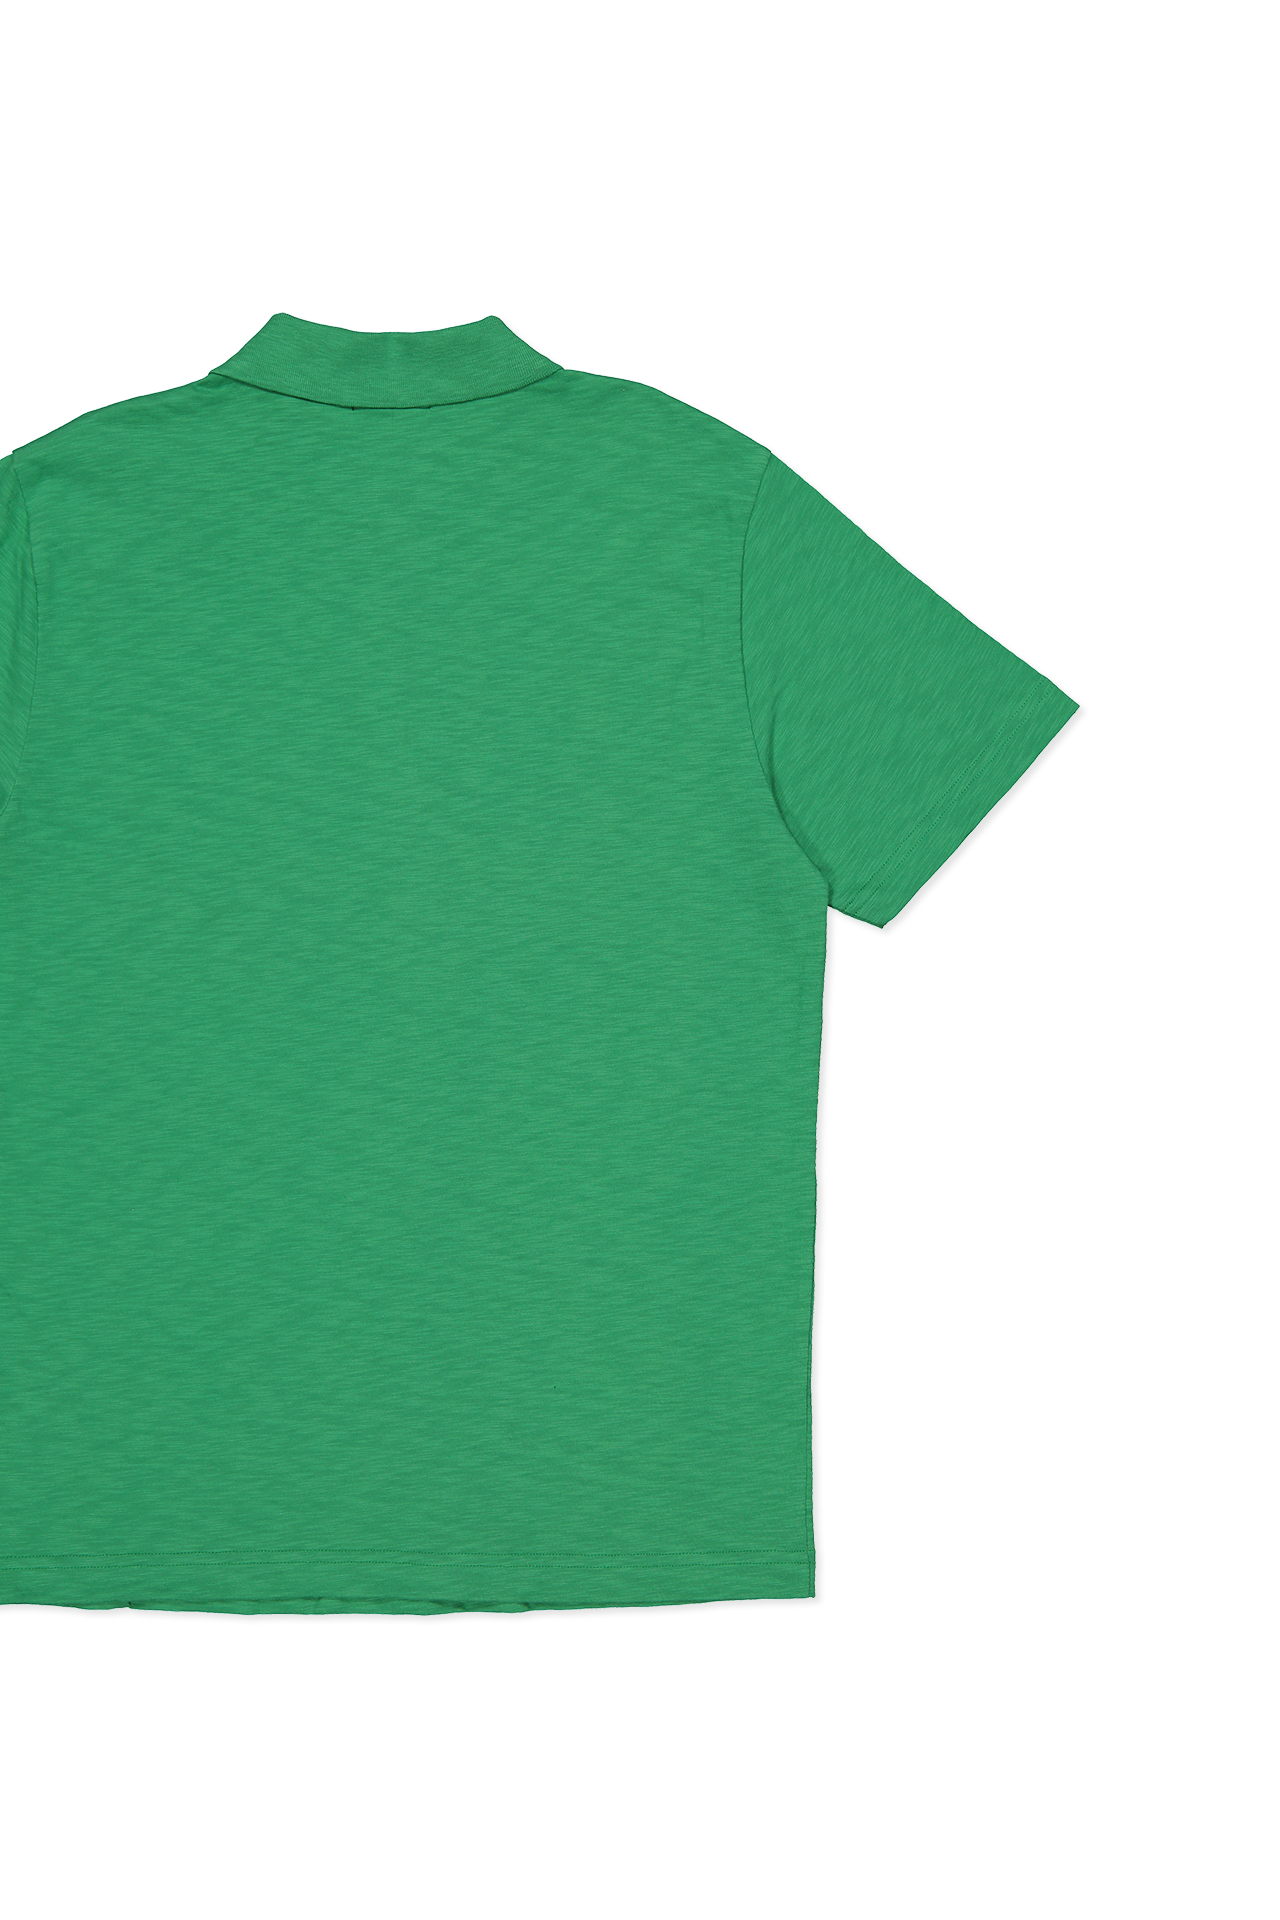 Bron Polo Shirt in Cosmos Slub Cotton (7109028282483)